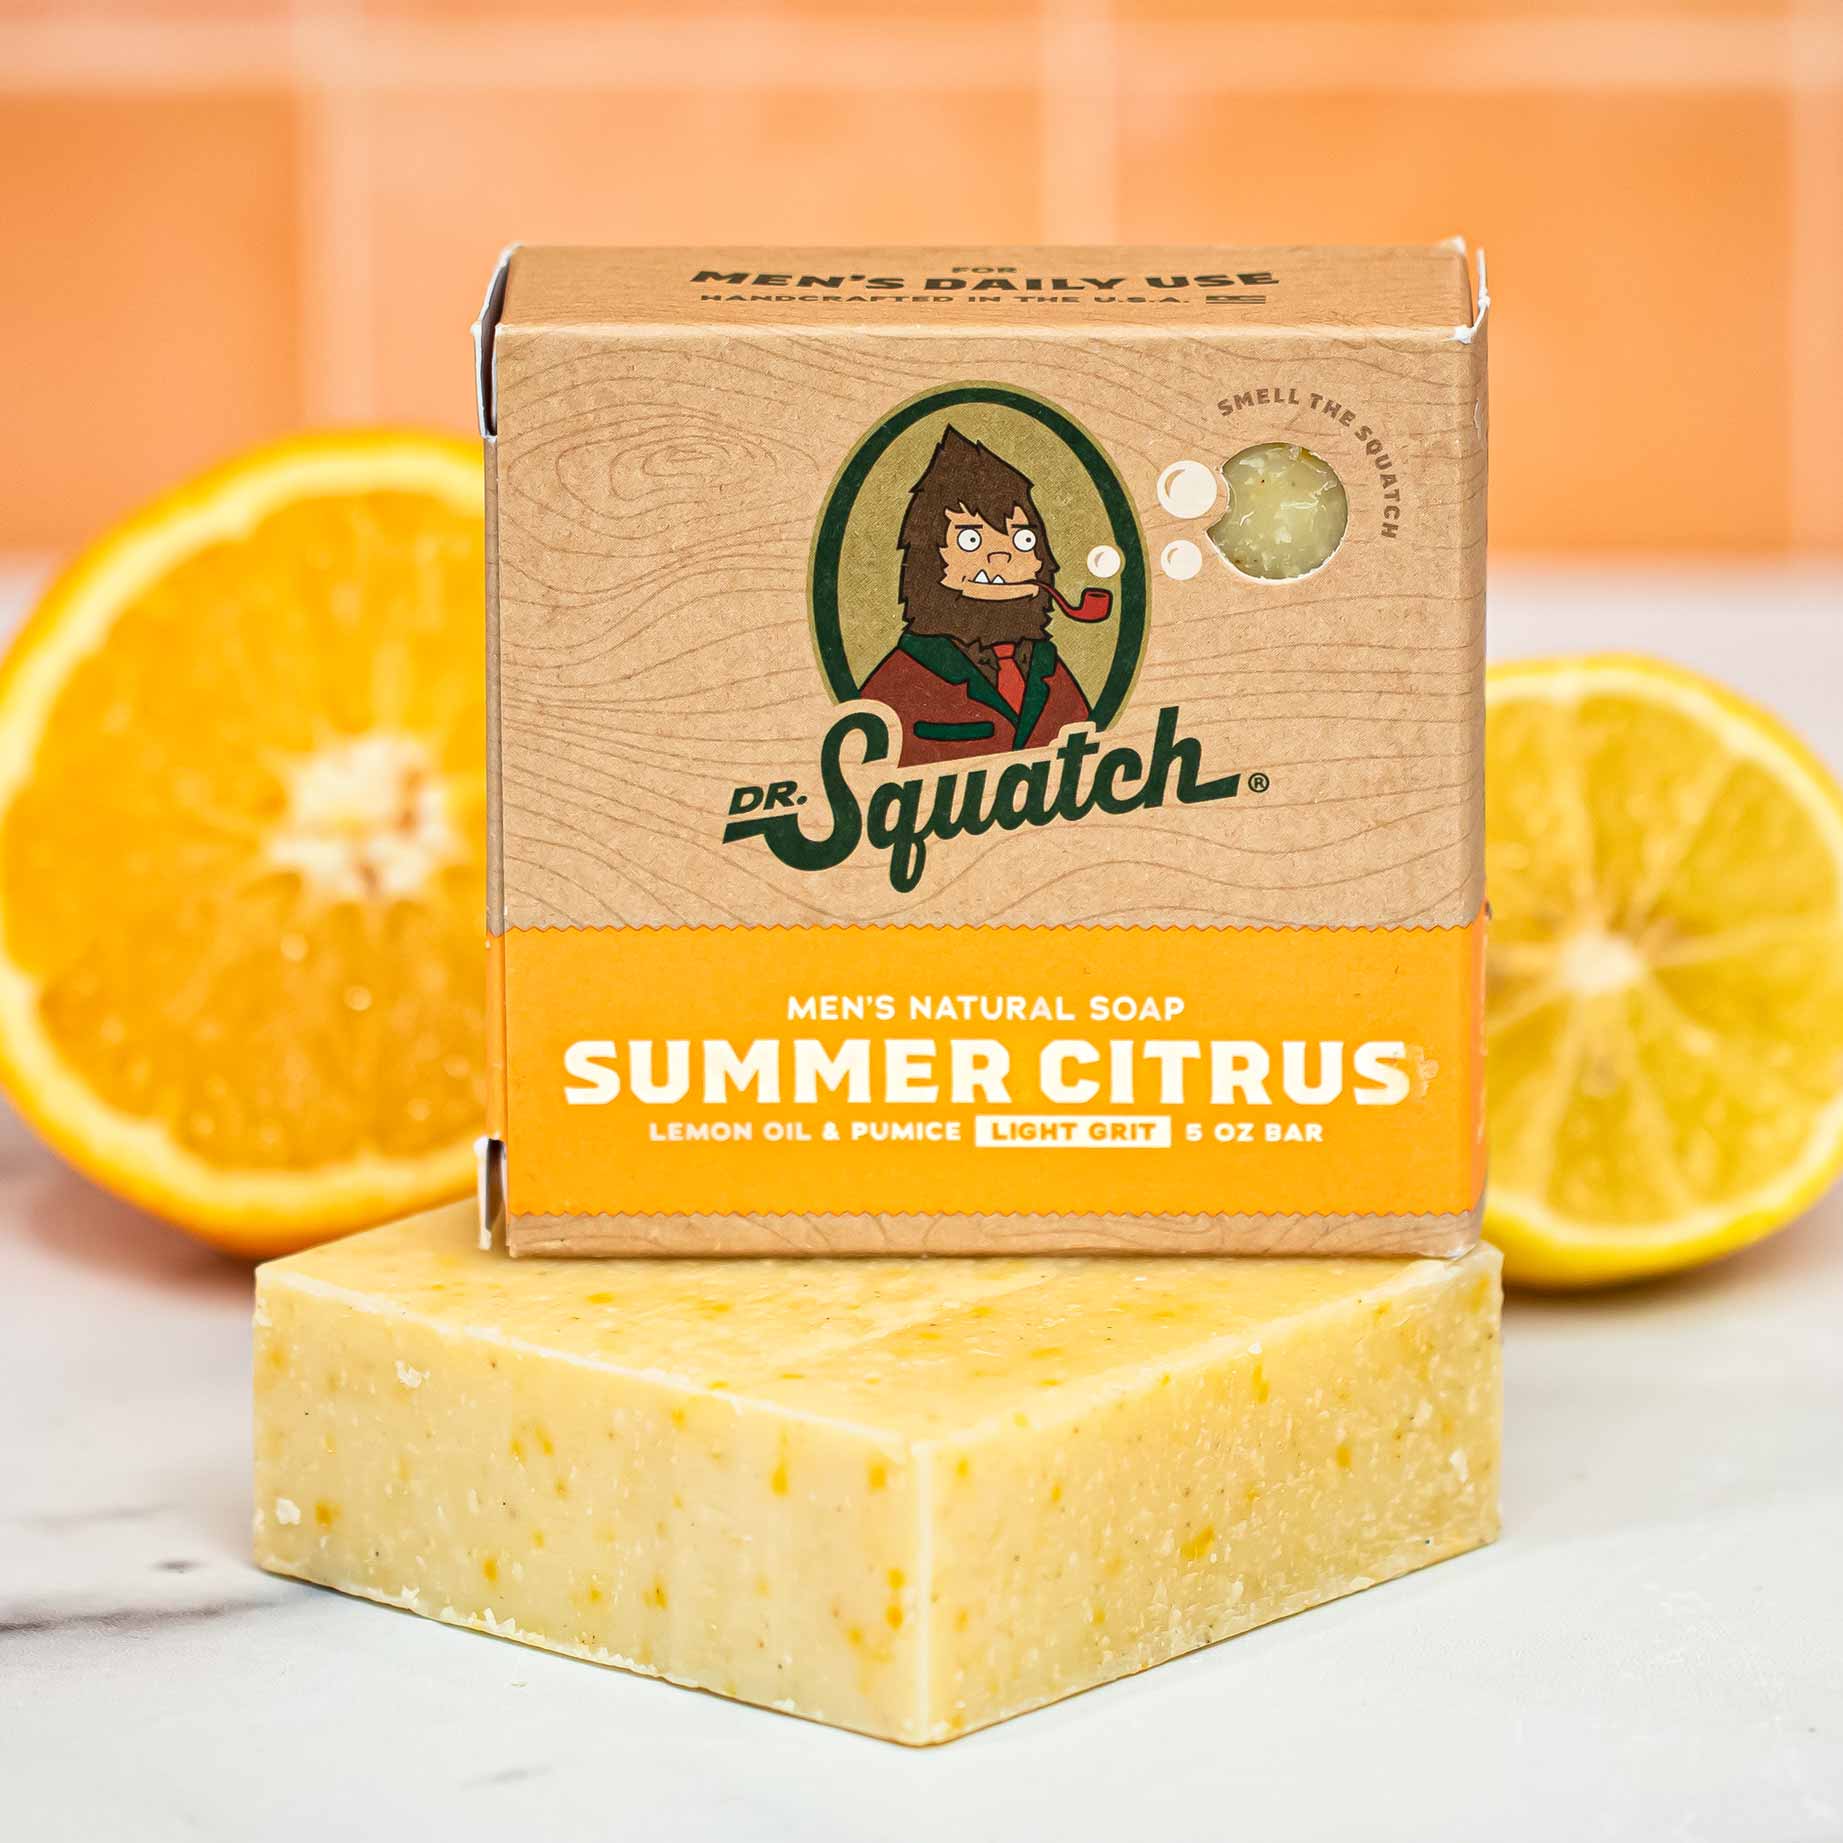 Dr. Squatch Summer Citrus Bar Soap